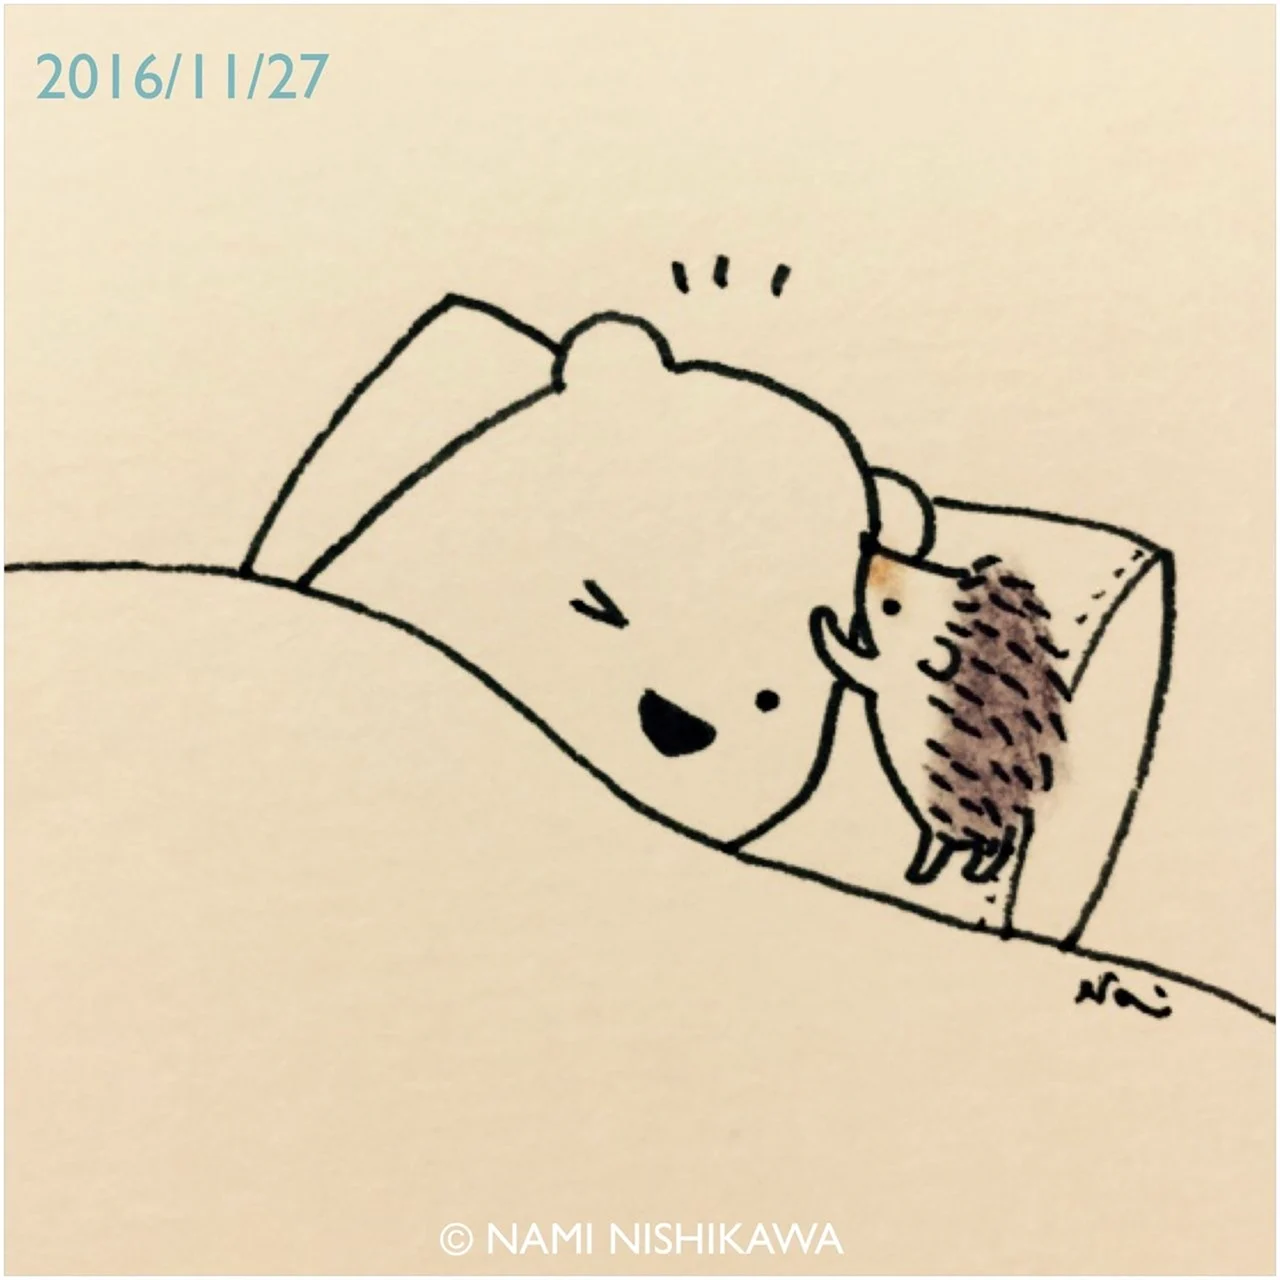 Nami Nishikawa Ежик и медведь